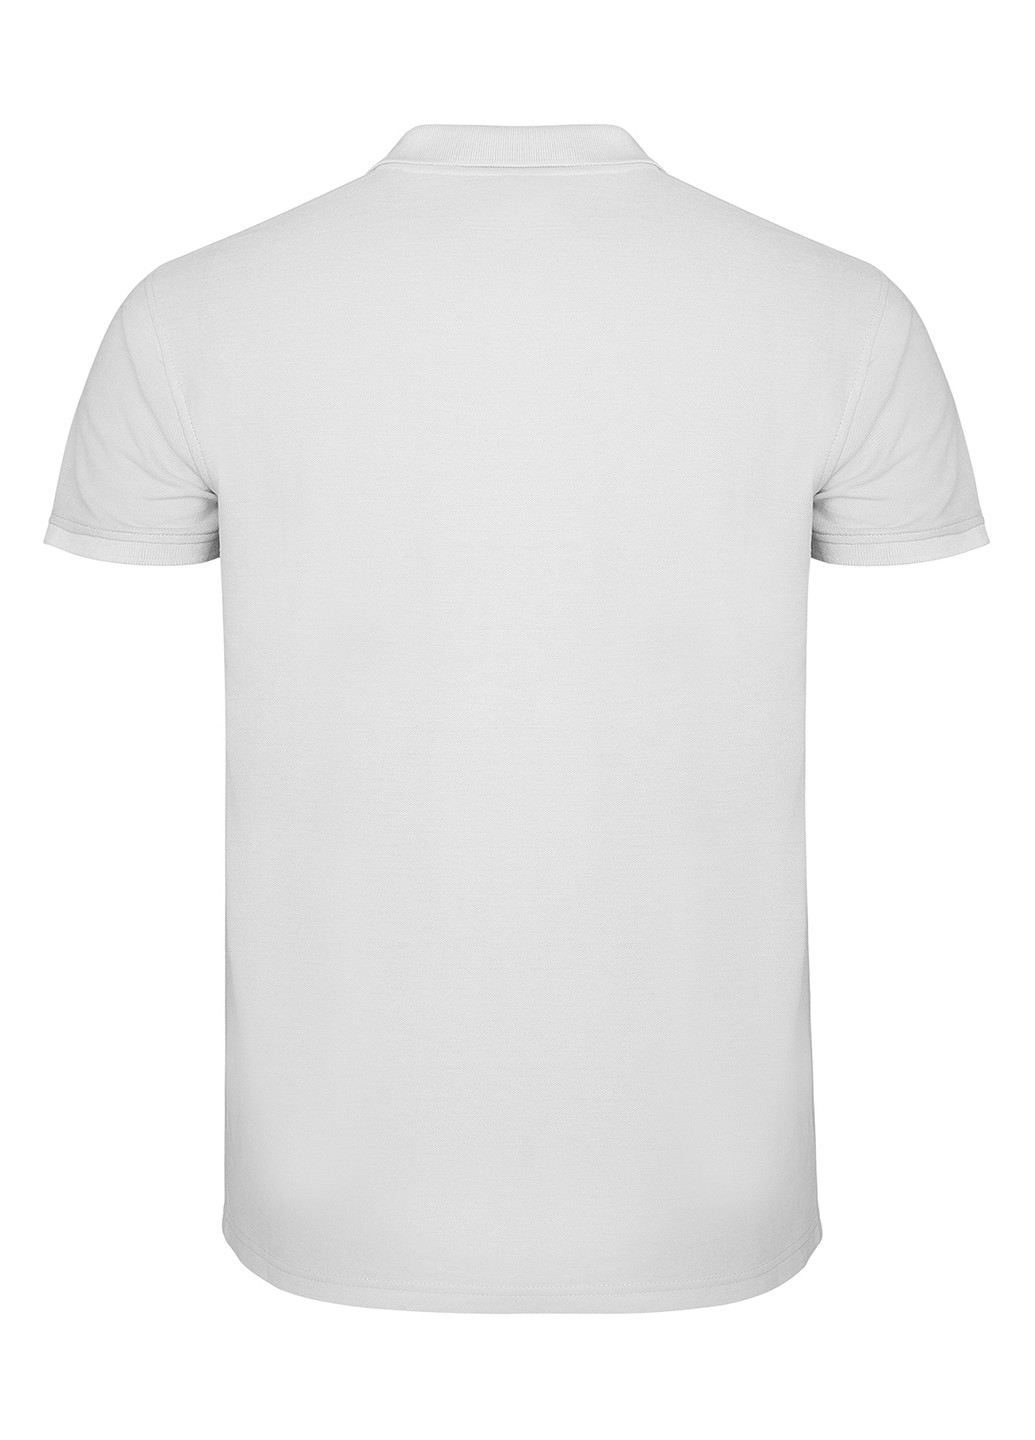 Белая футболка-поло для мужчин Roly однотонная